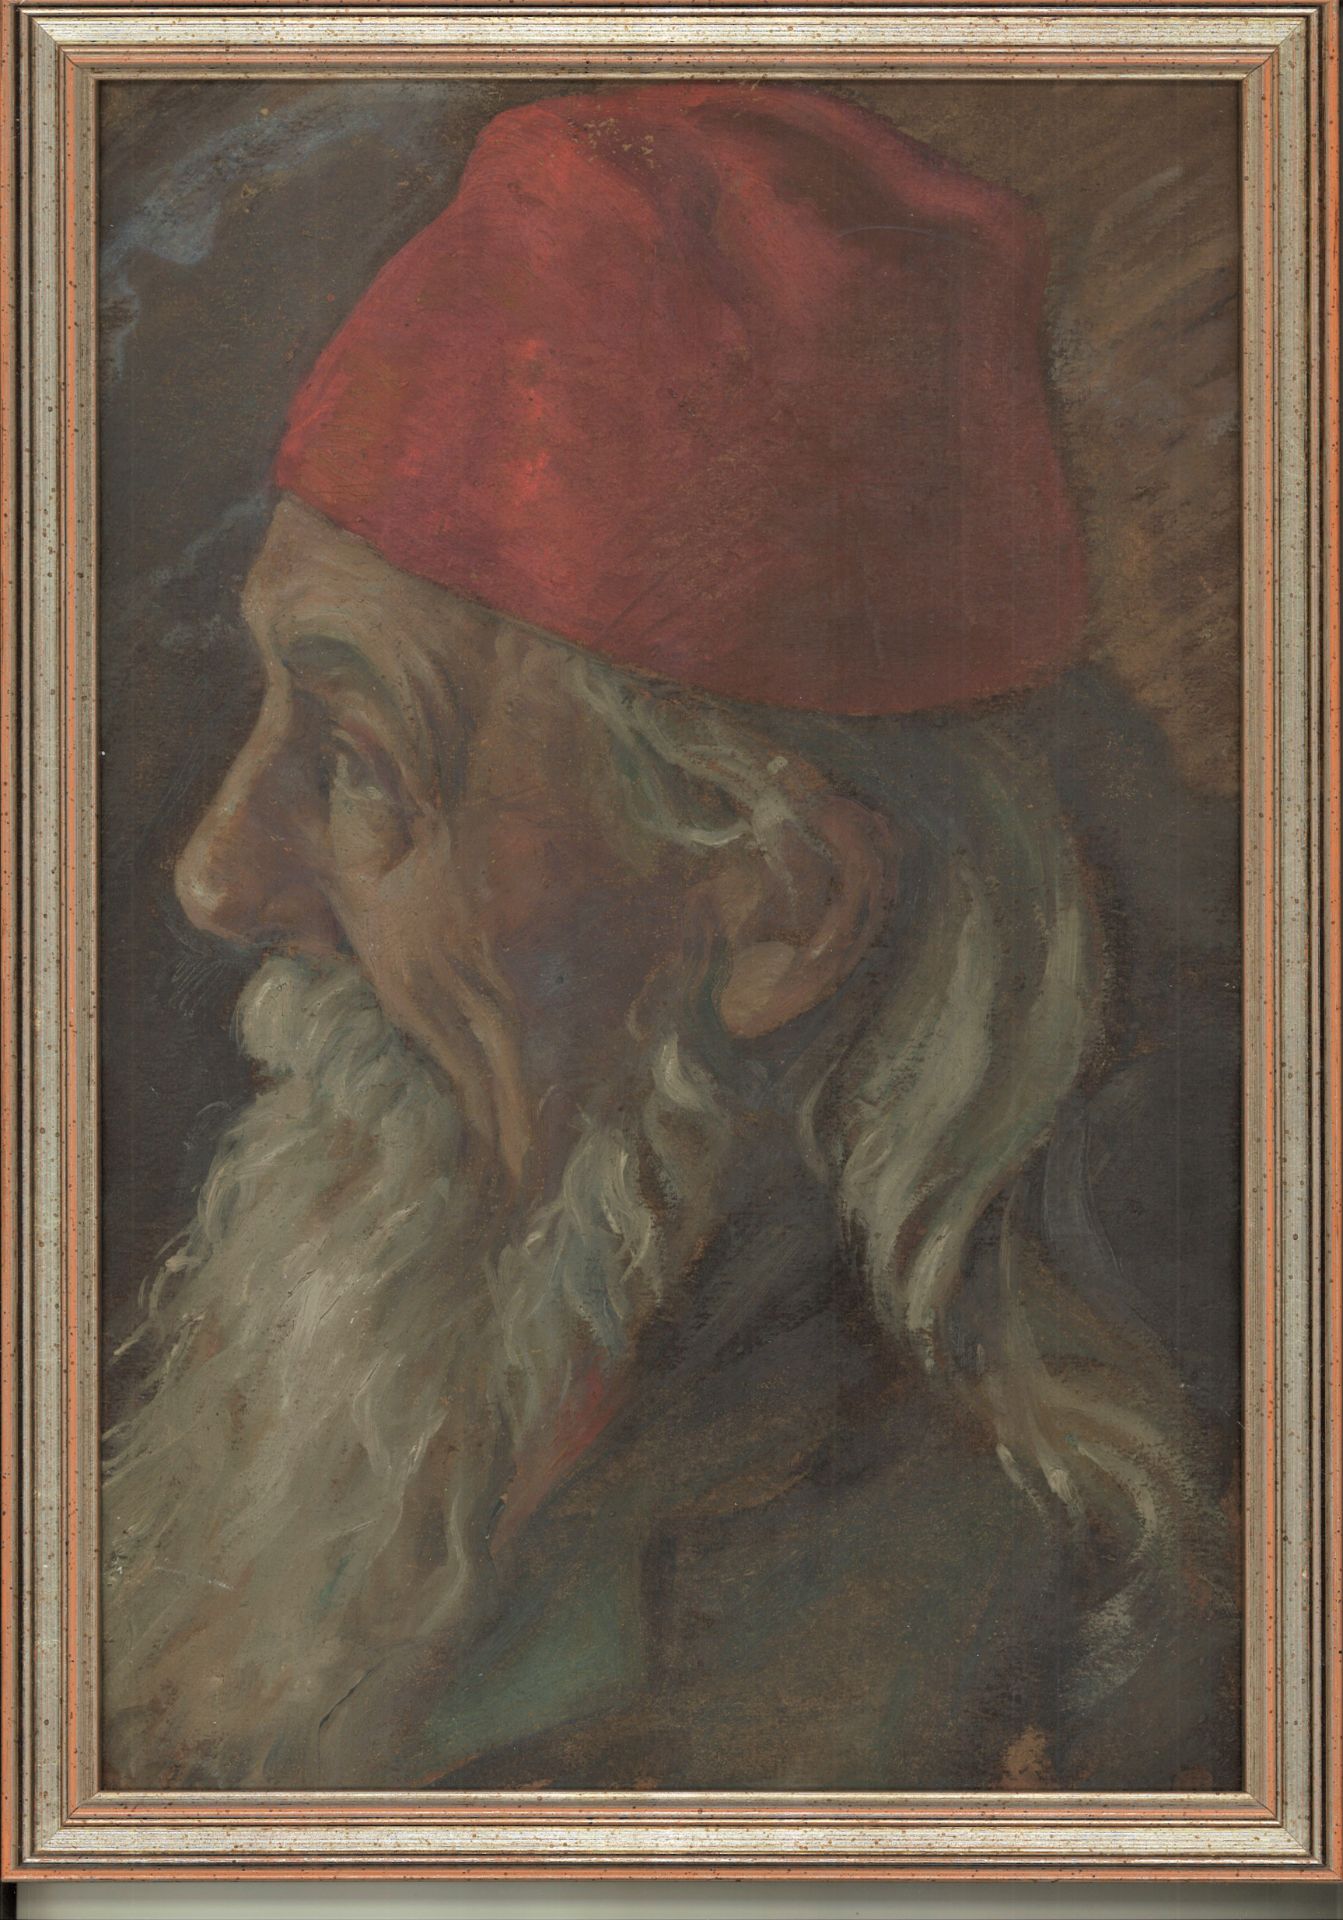 unbekannter Künstler, Ölgemälde auf Pappe, "Bärtiger Mann mit roter Kappe", gerahmt, Maße: ca.